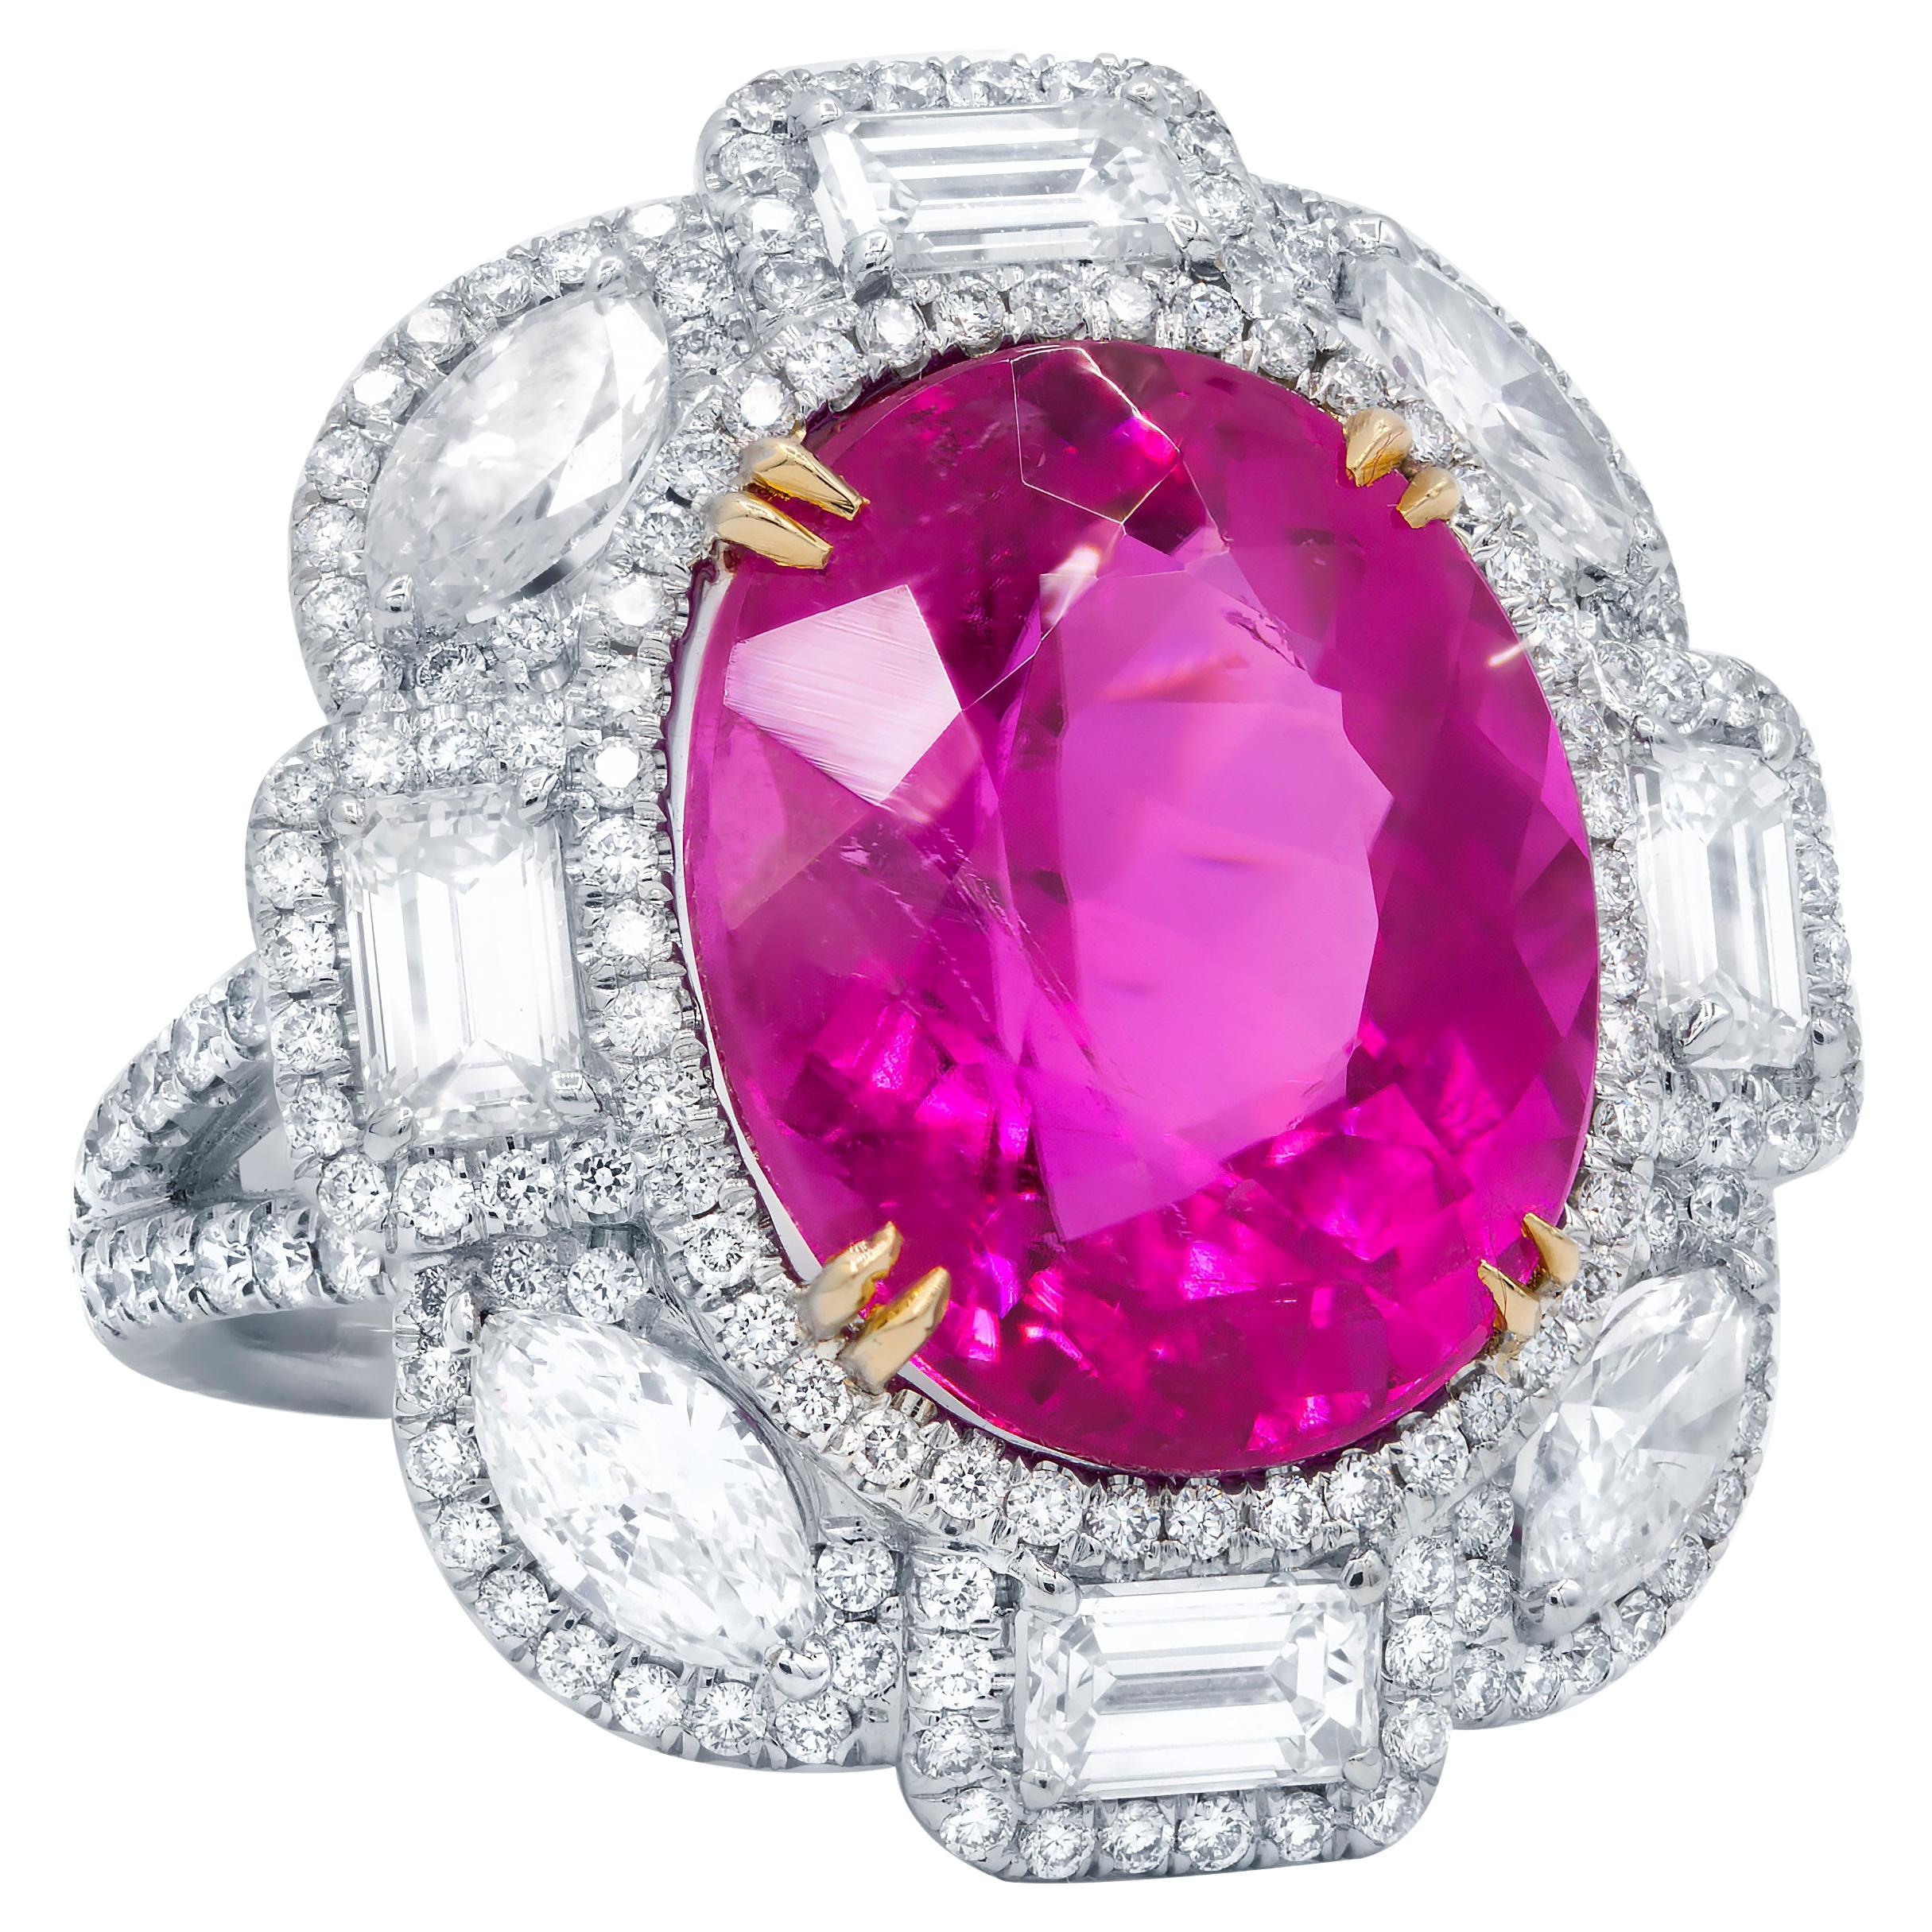 Diana M. Platinum  pink tourmaline and diamond ring featuring a center 11.80 ct 